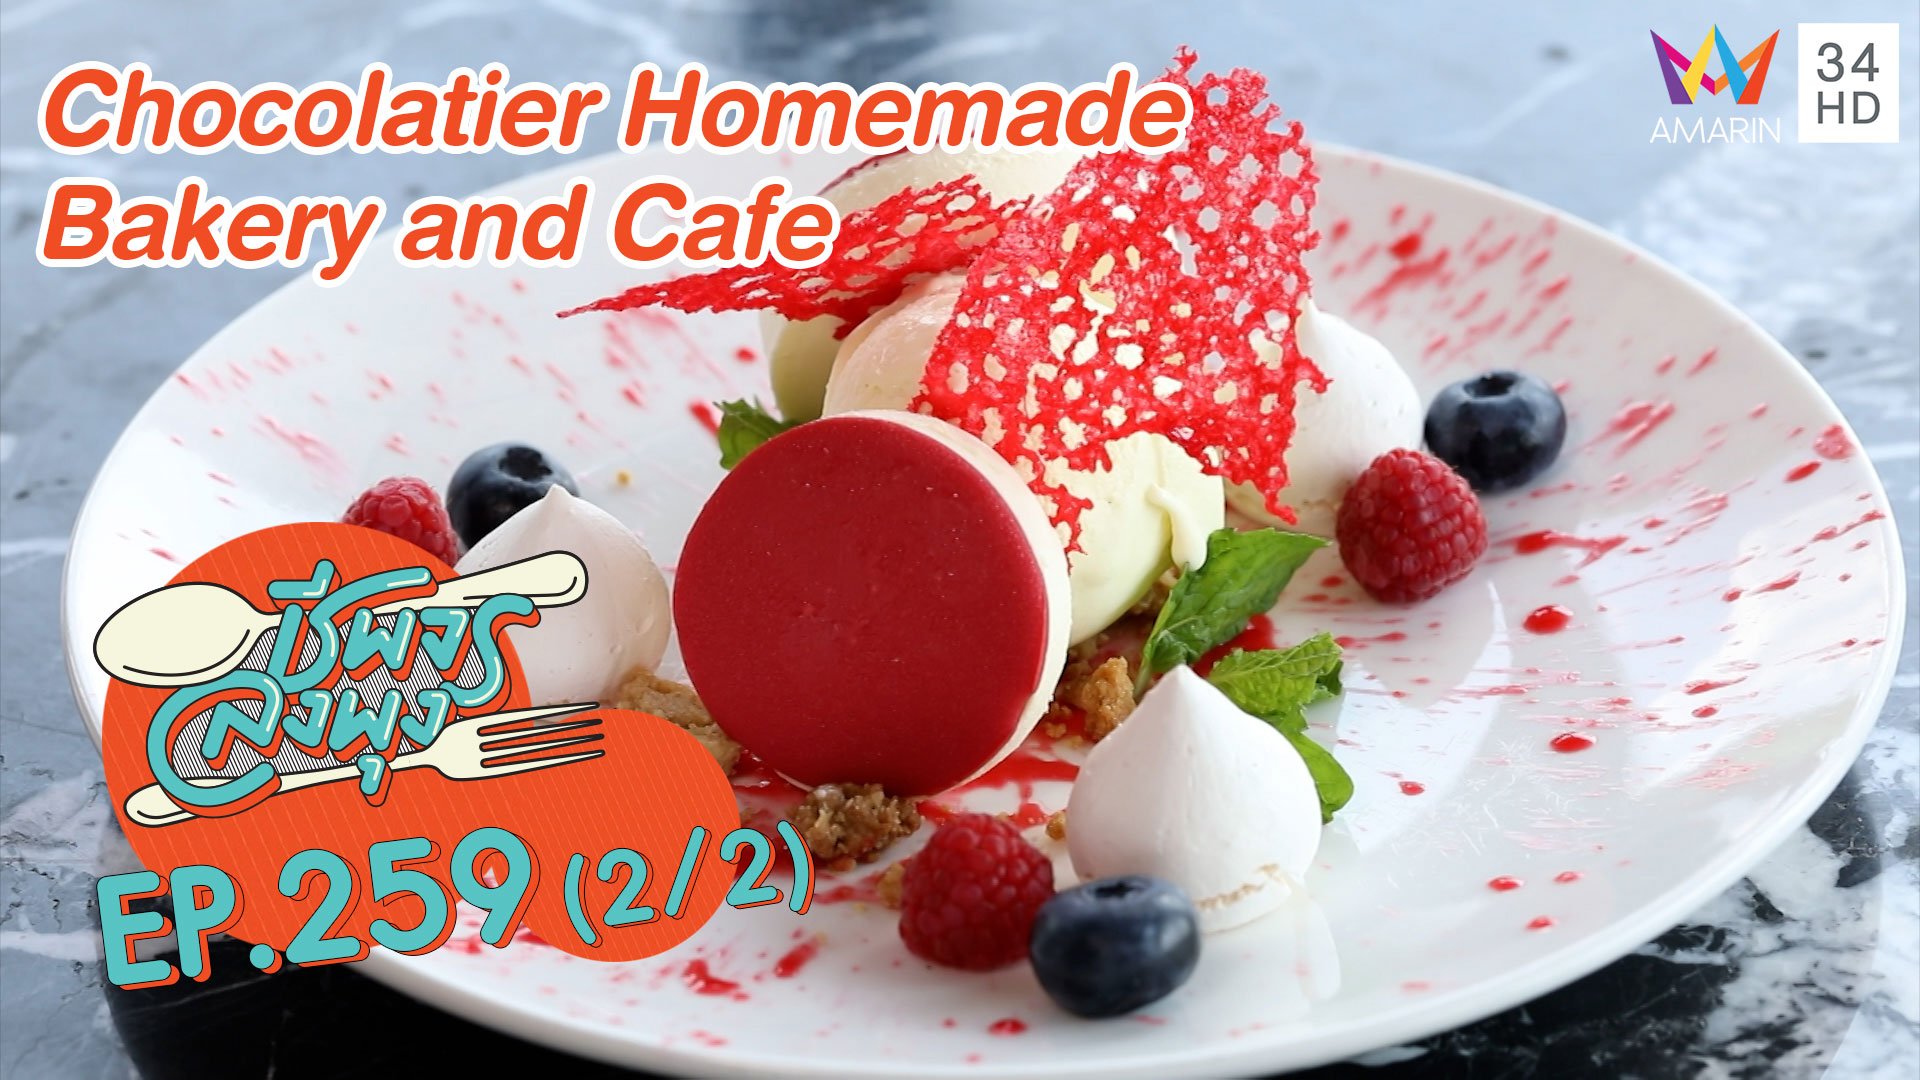 'Chocolatier Homemade Bakery and Cafe' เด็ดทั้งคาวหวาน | ชีพจรลงพุง | 29 พ.ย. 63 (2/2) | AMARIN TVHD34